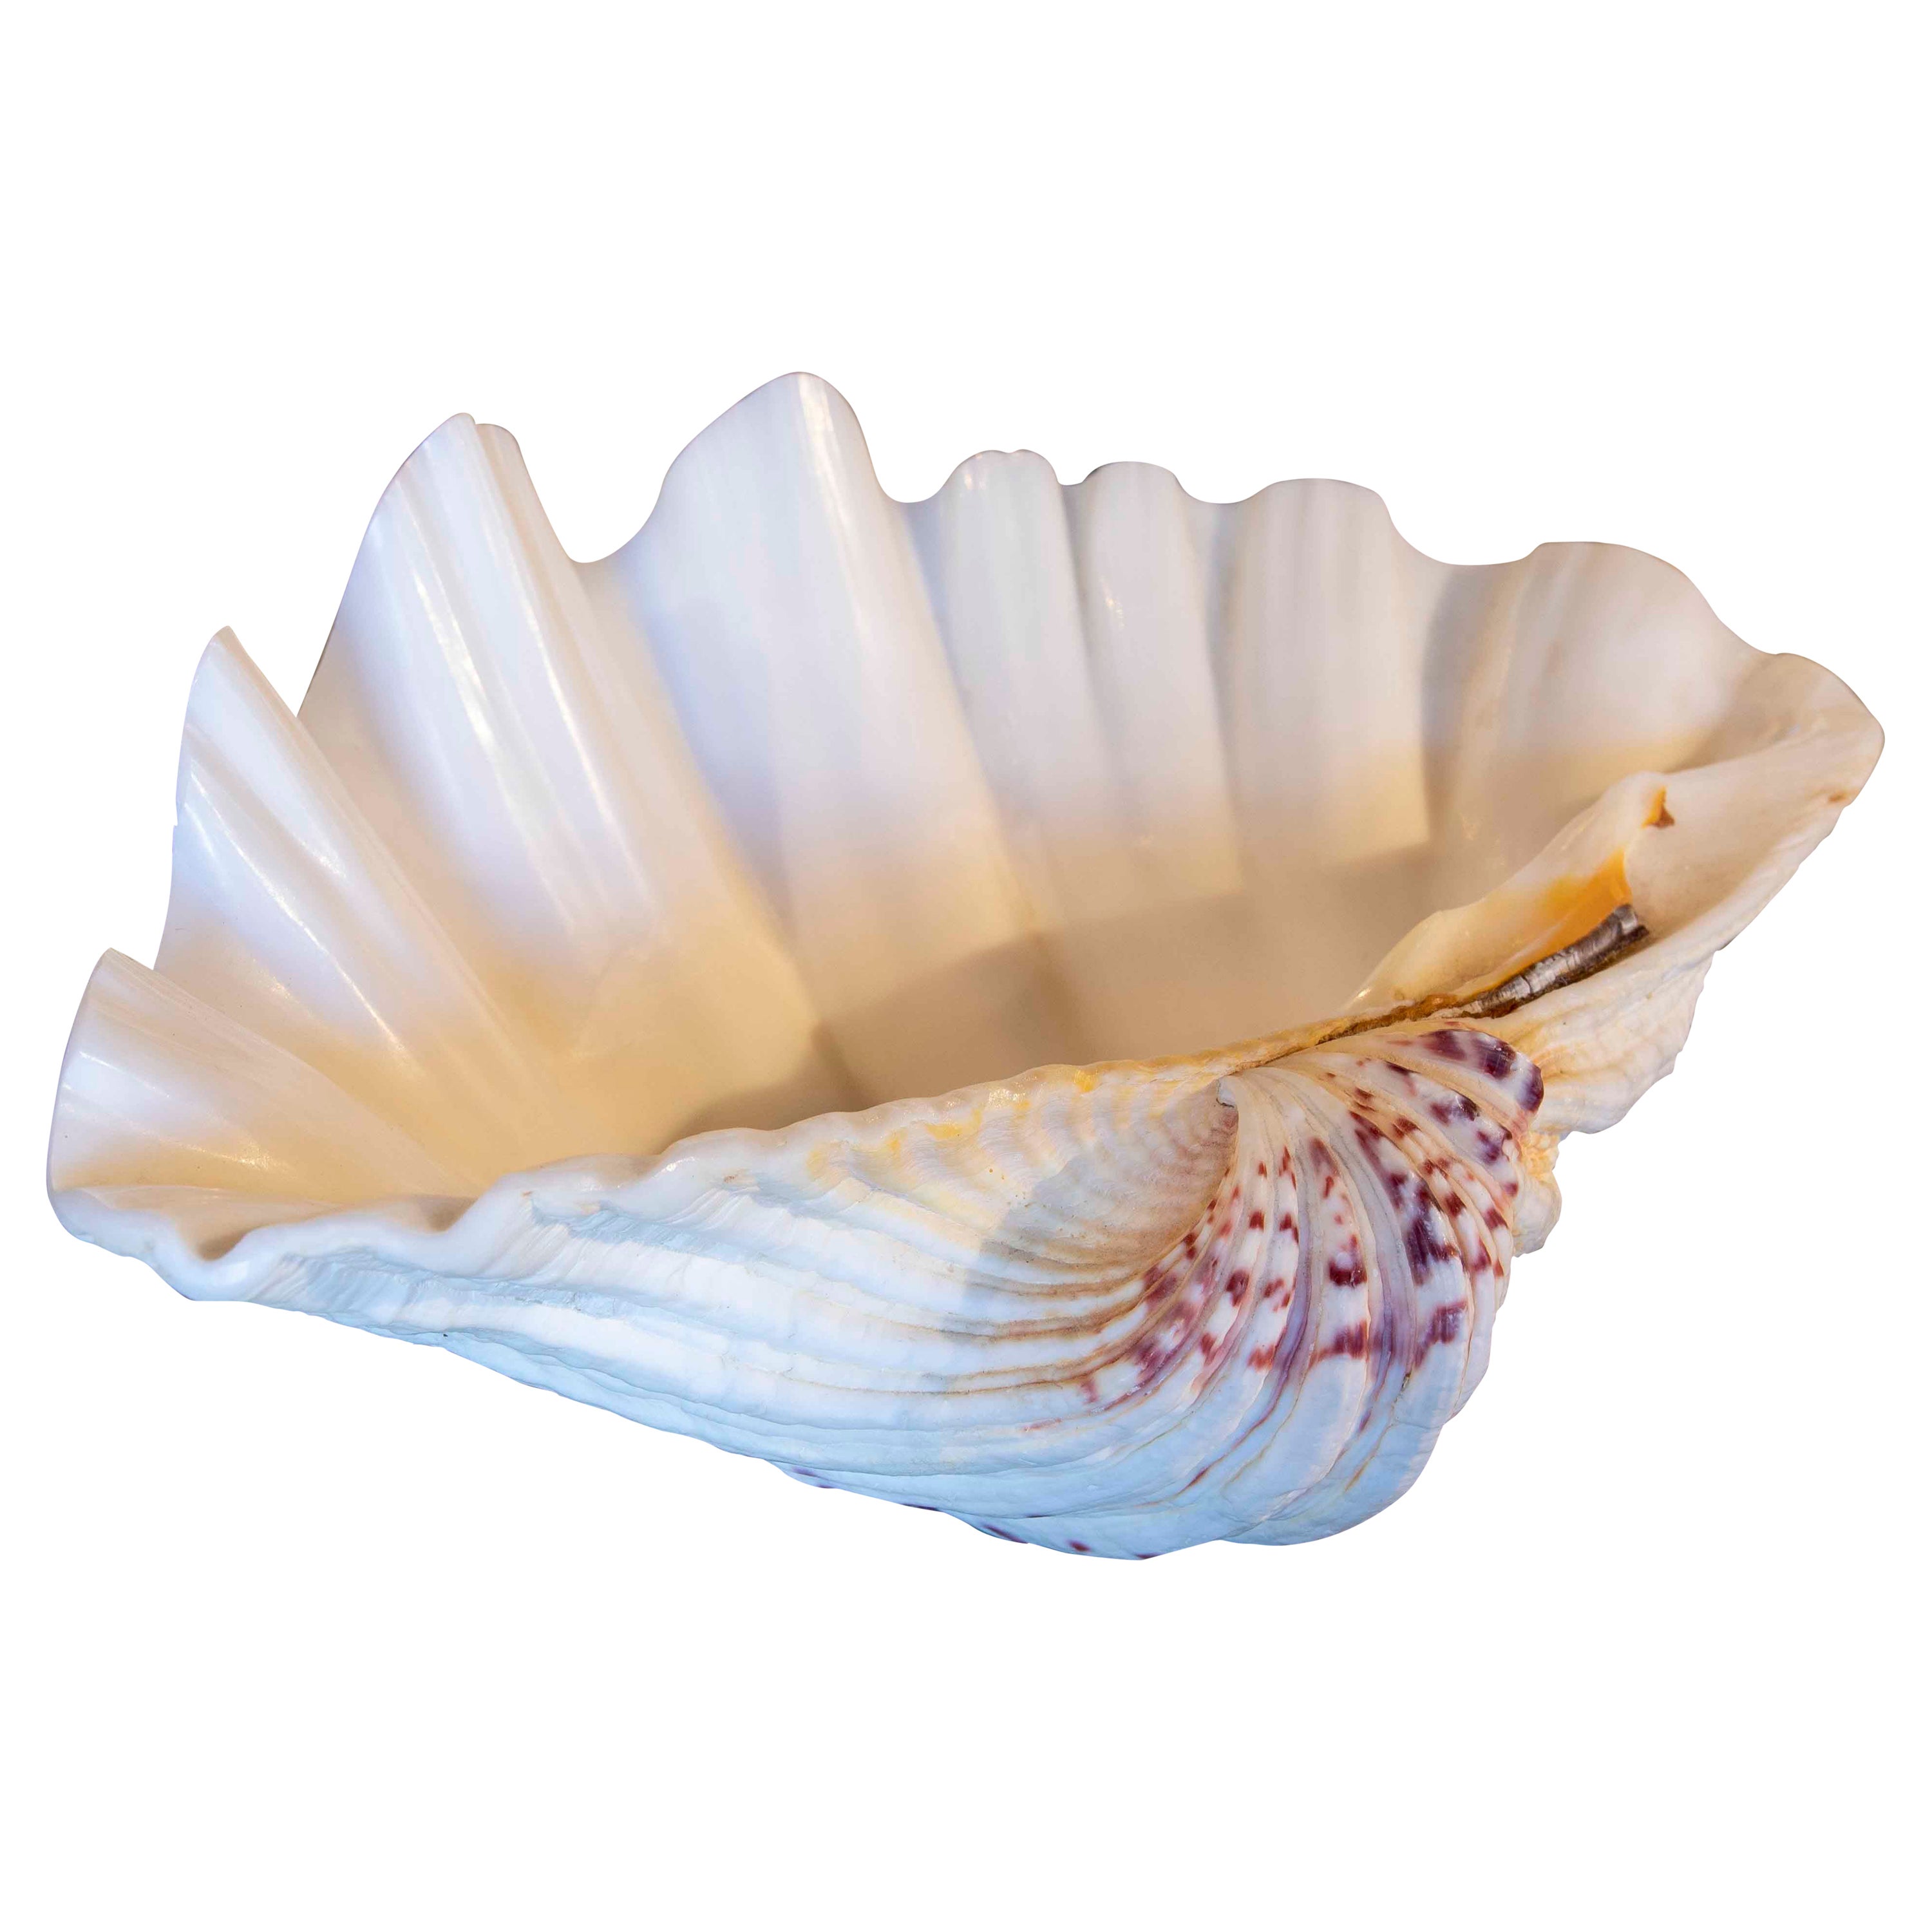 Big Clam Shell Natural Specimen For Sale